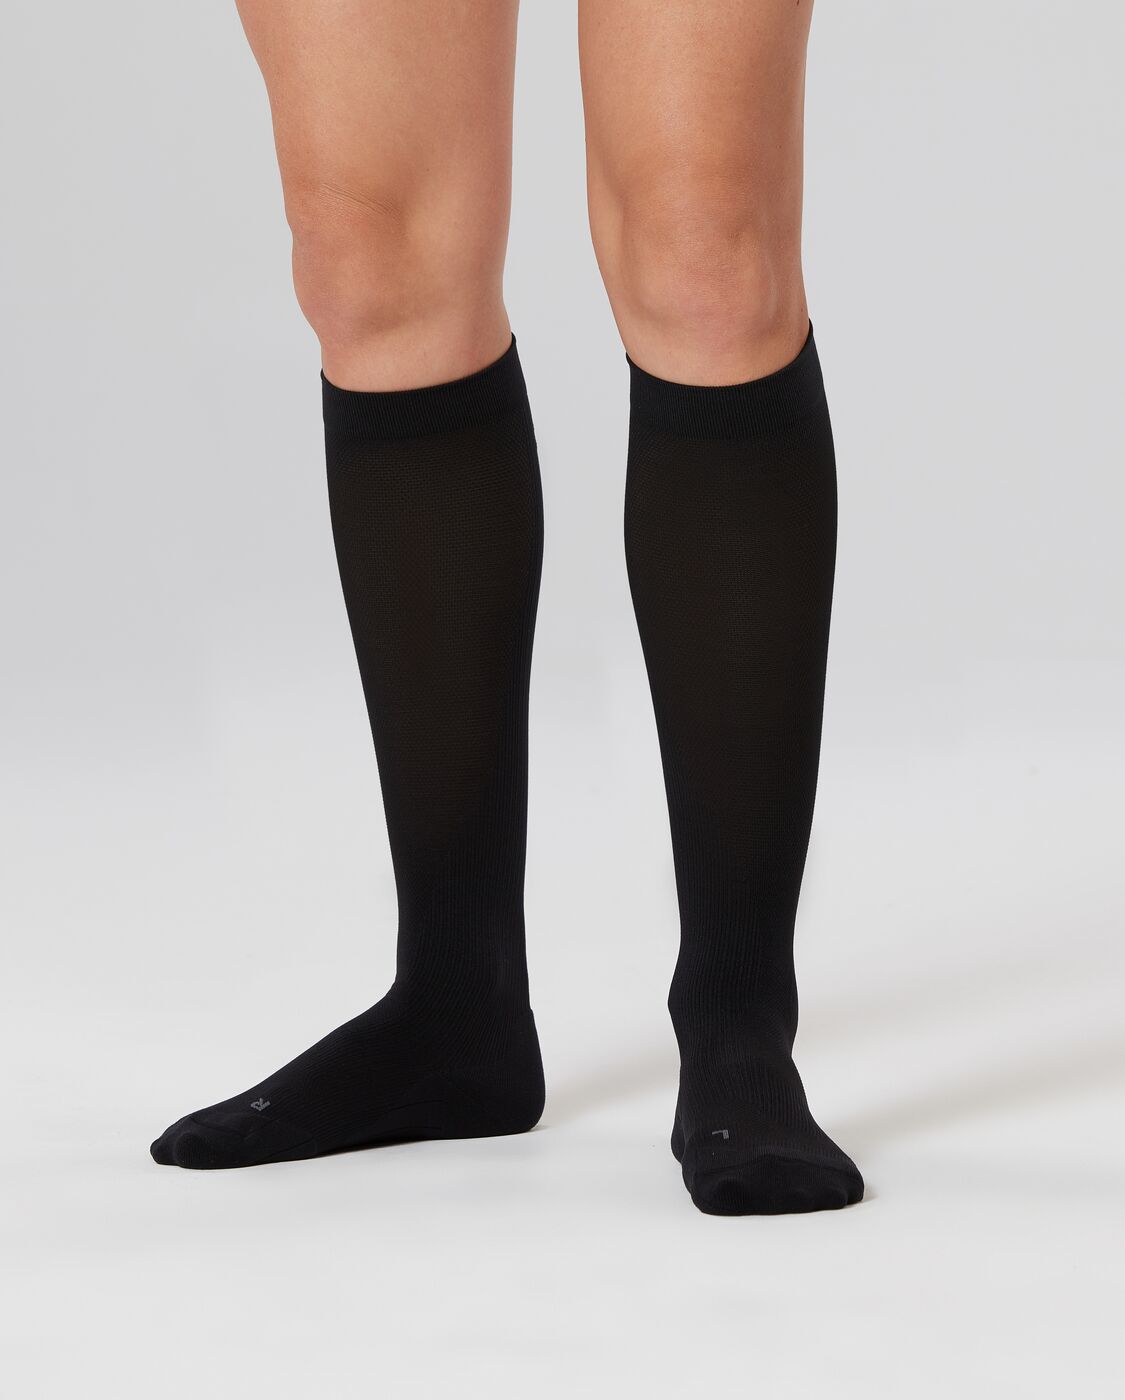 Knee Length Perf Run Compression Socks, Black/Black